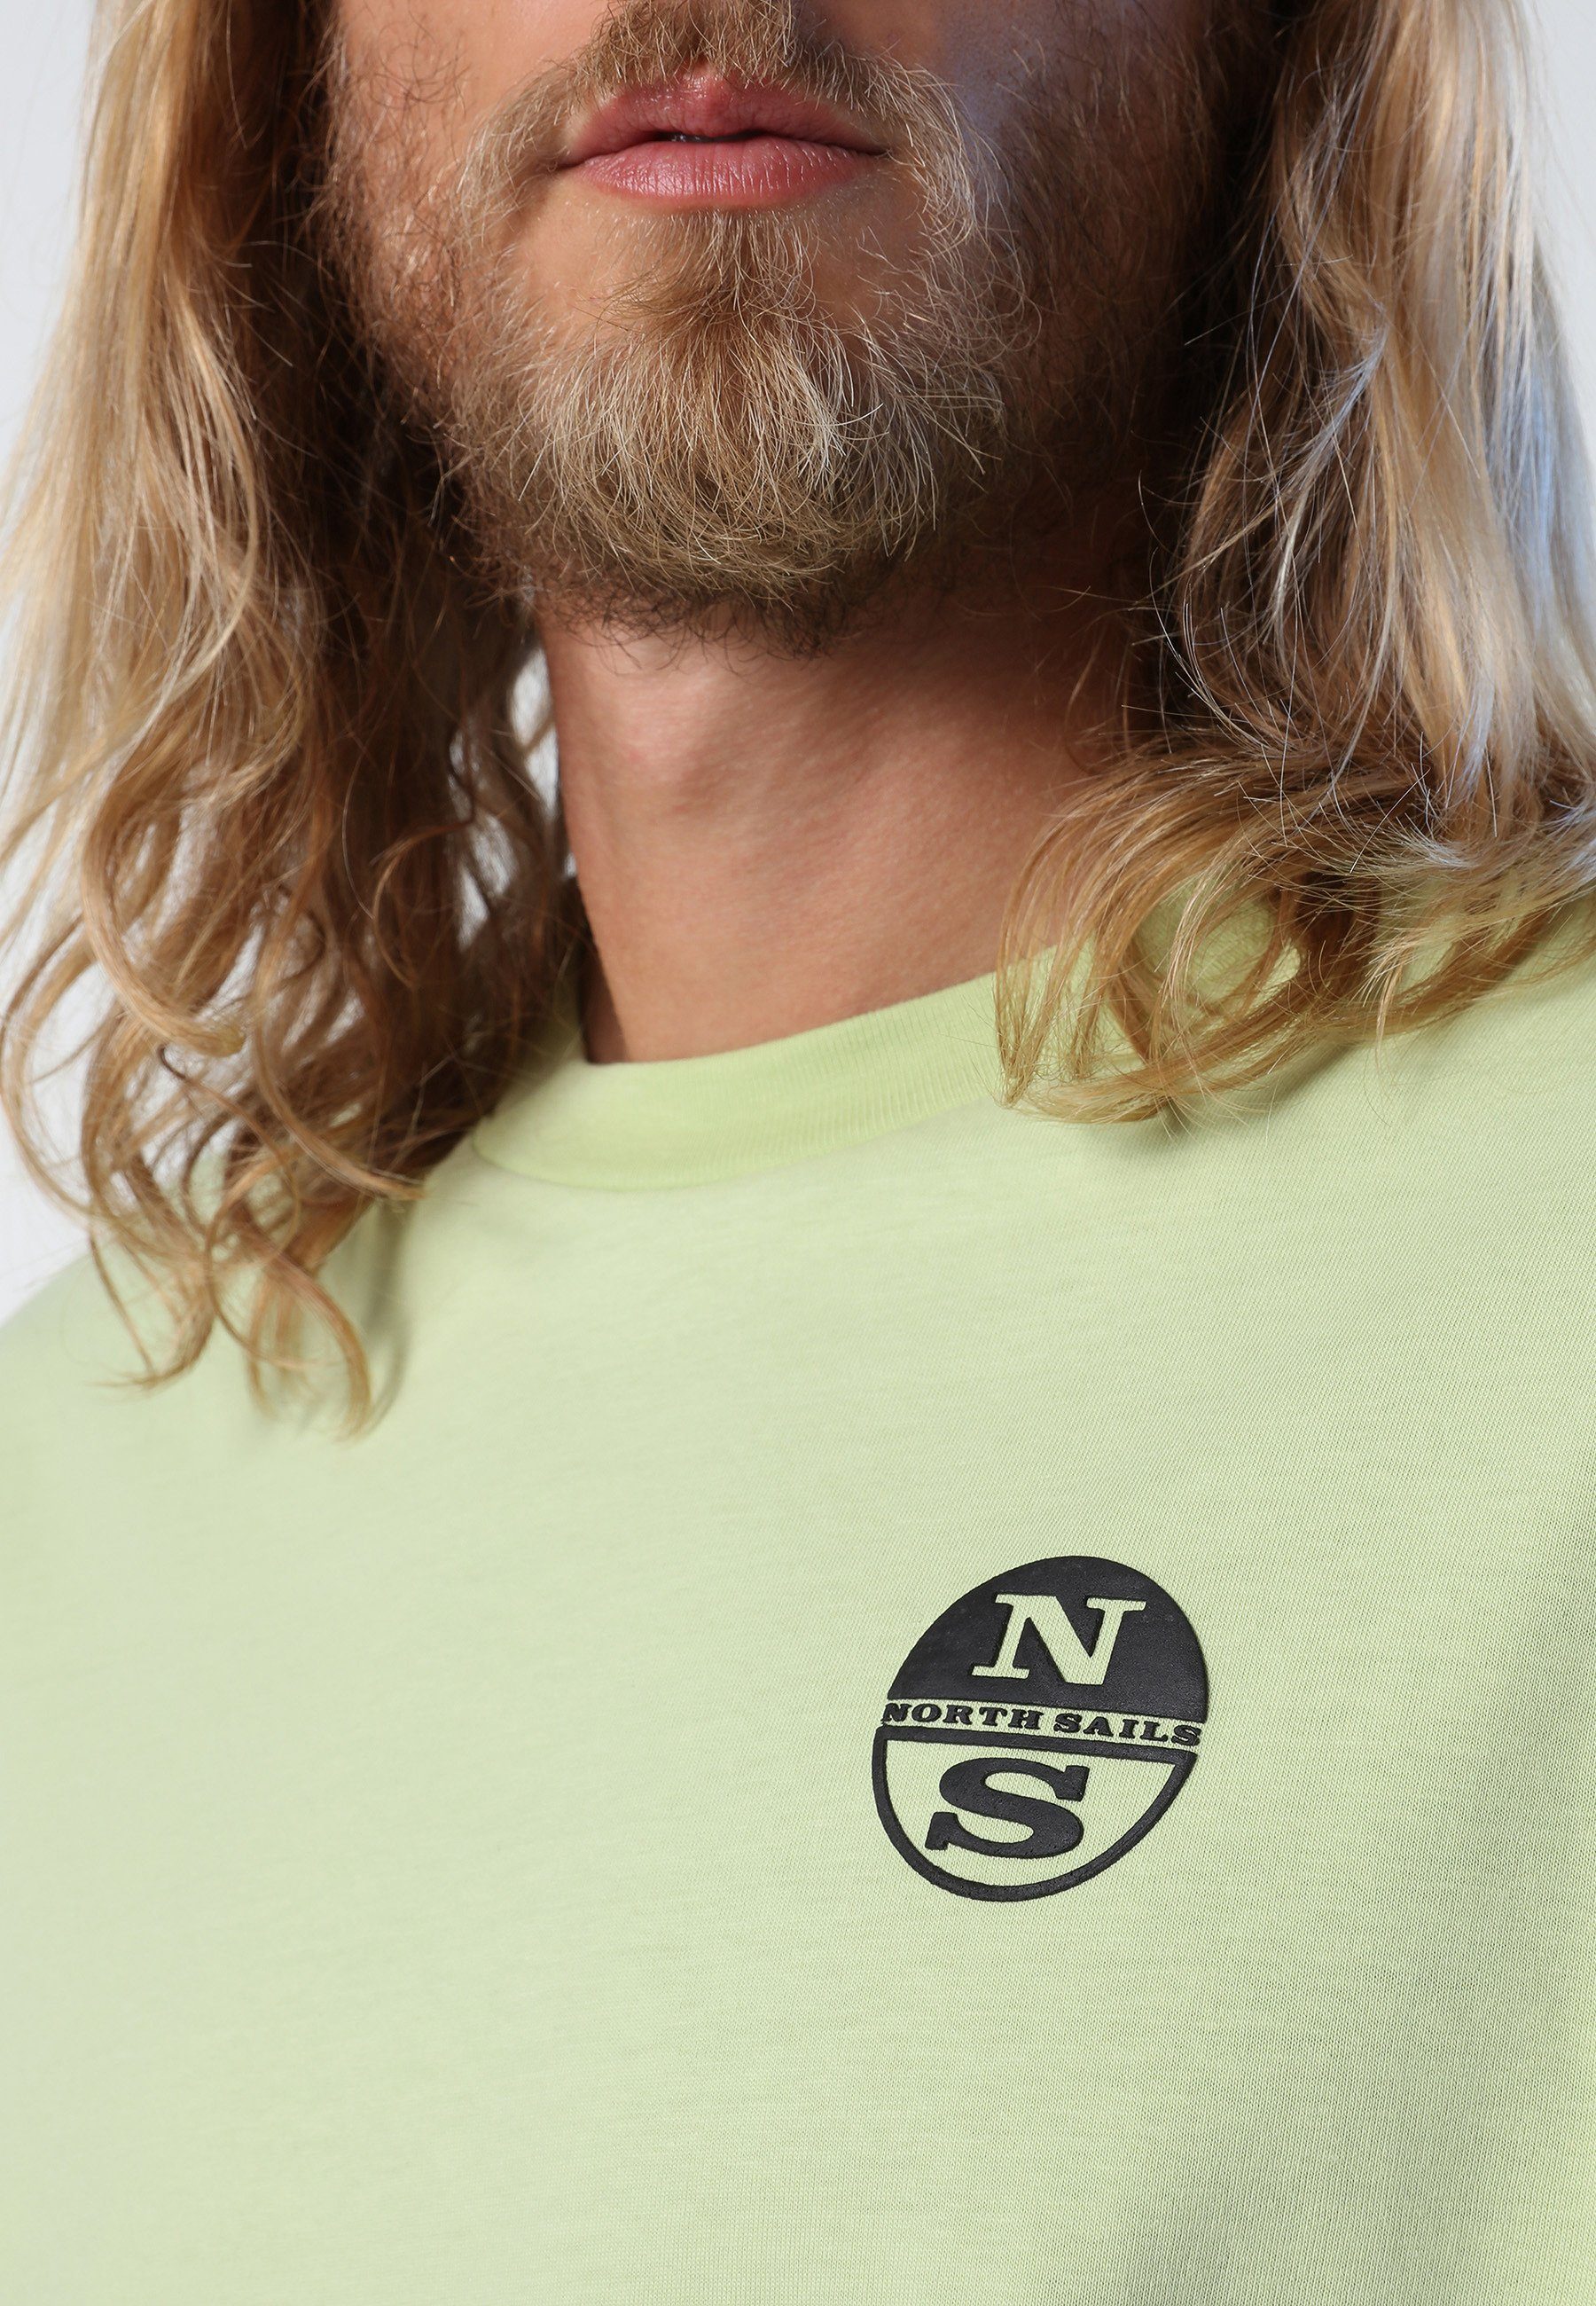 North Sails T-Shirt T-Shirt ASPHALT graphic print with T-shirt